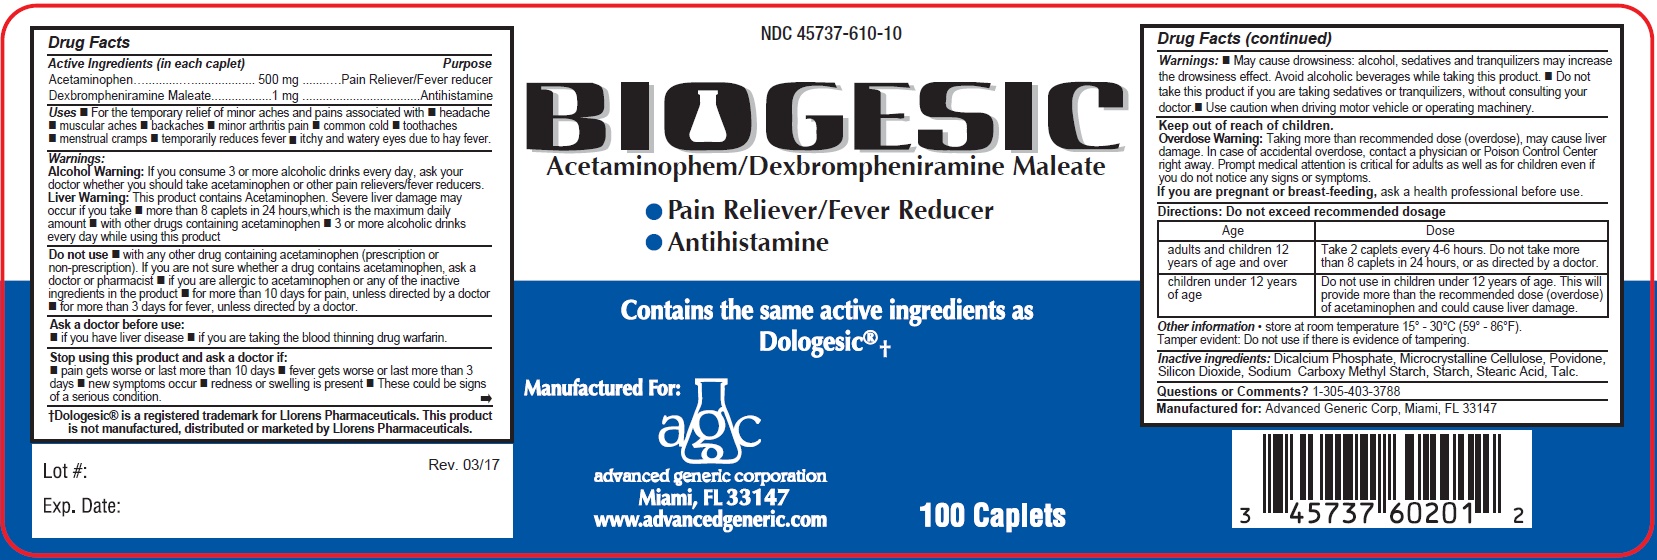 Biogesic